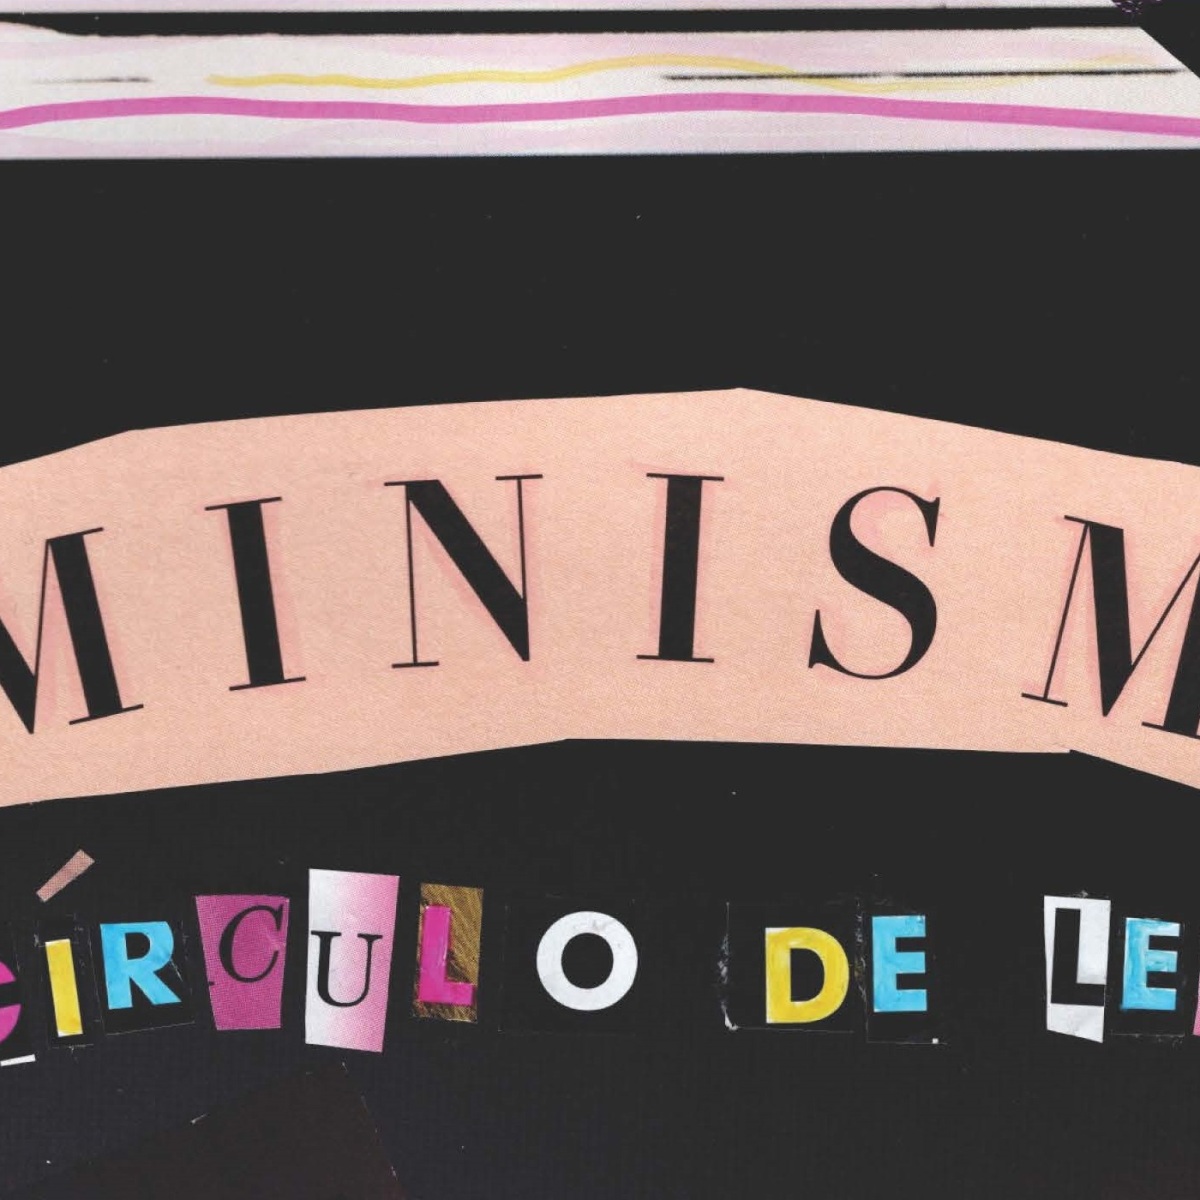 Feminismos: Círculo de lectura